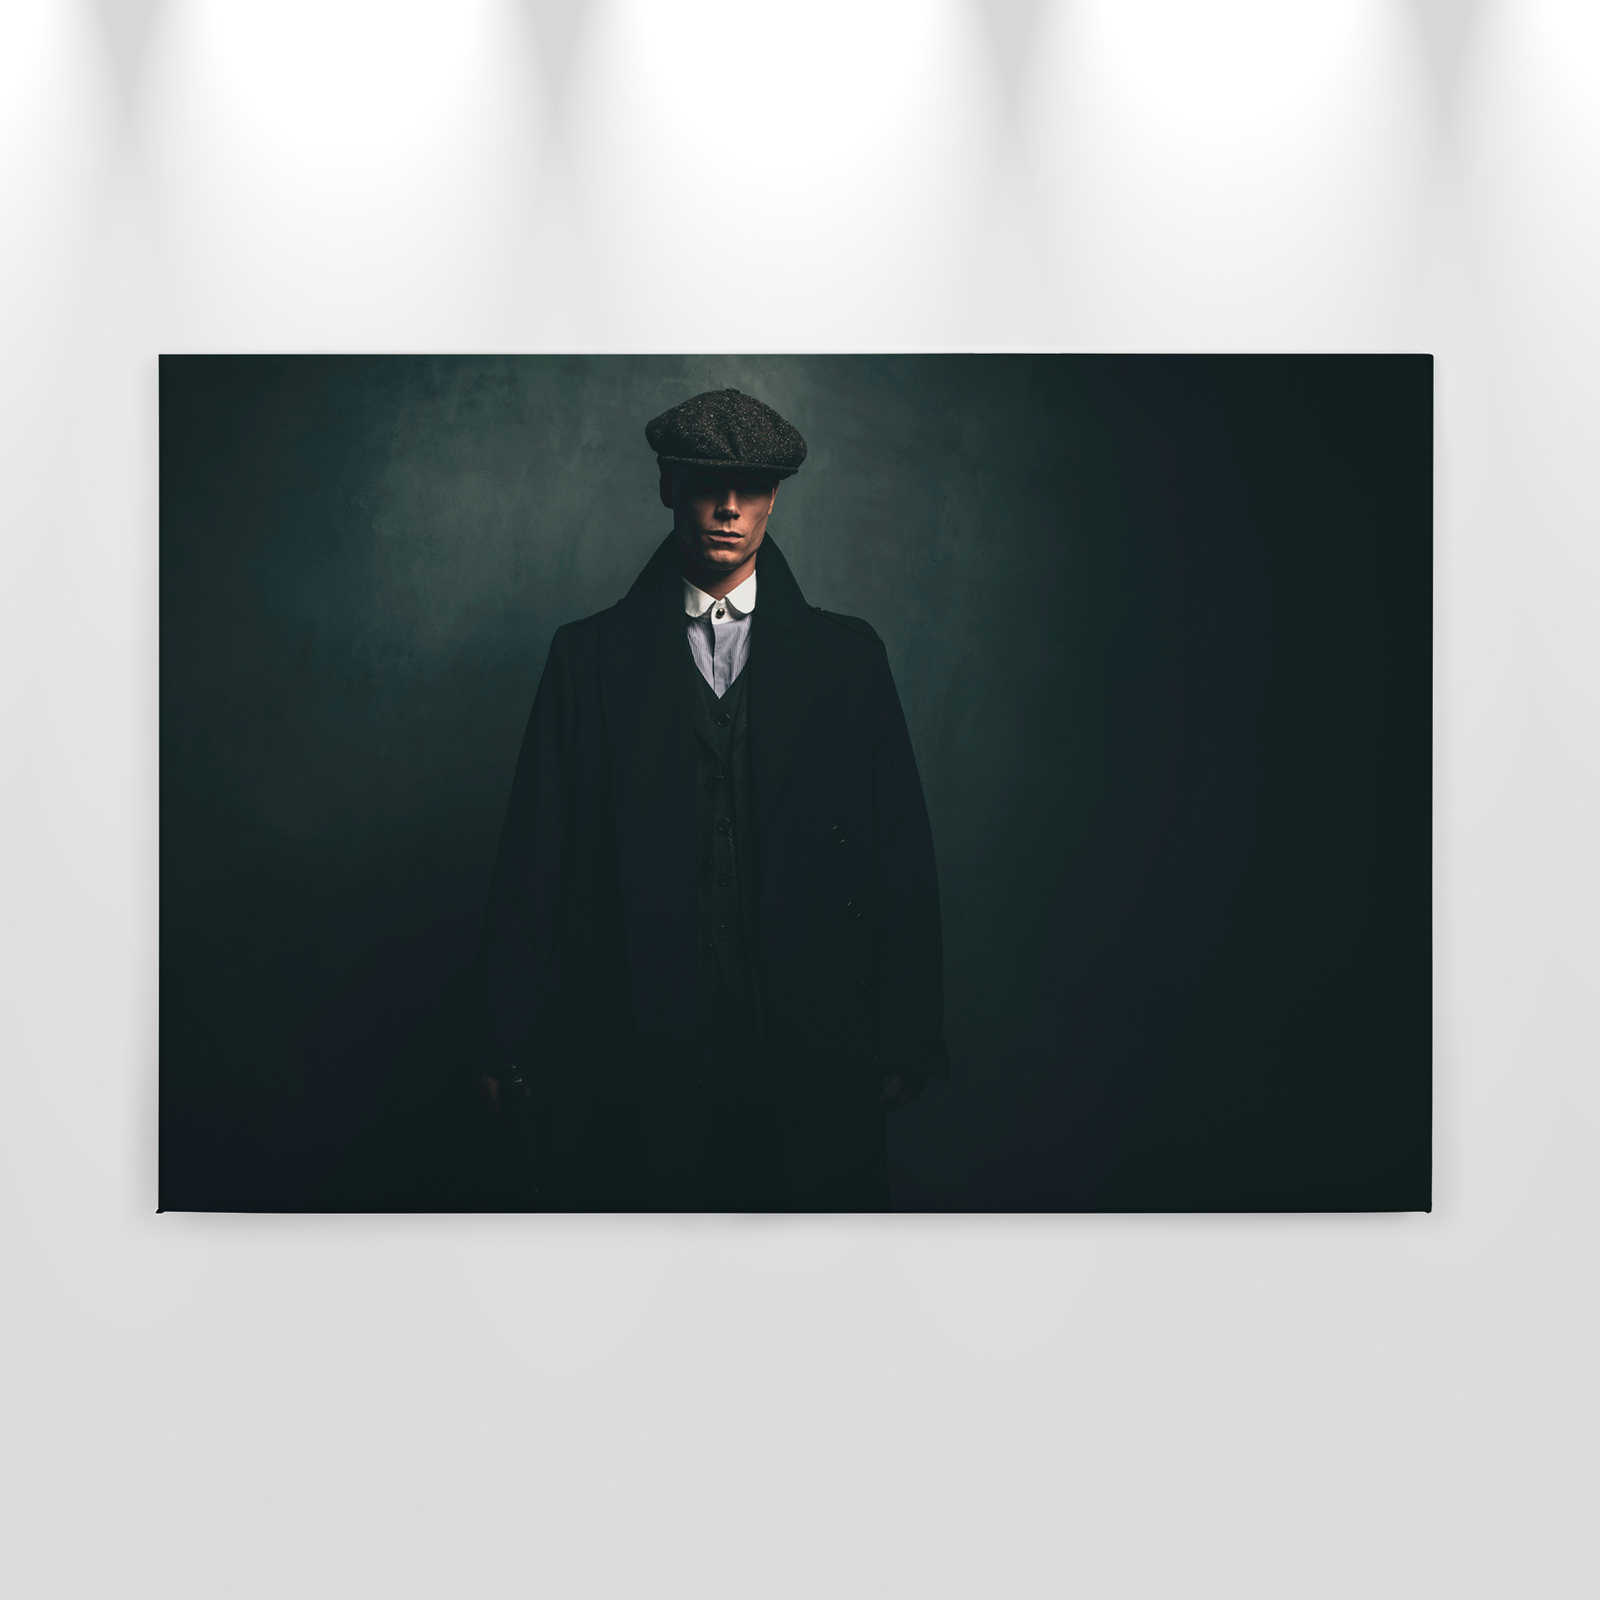             Roger 2 - Leinwandbild Gangster, 1920 Retro Portrait – 0,90 m x 0,60 m
        